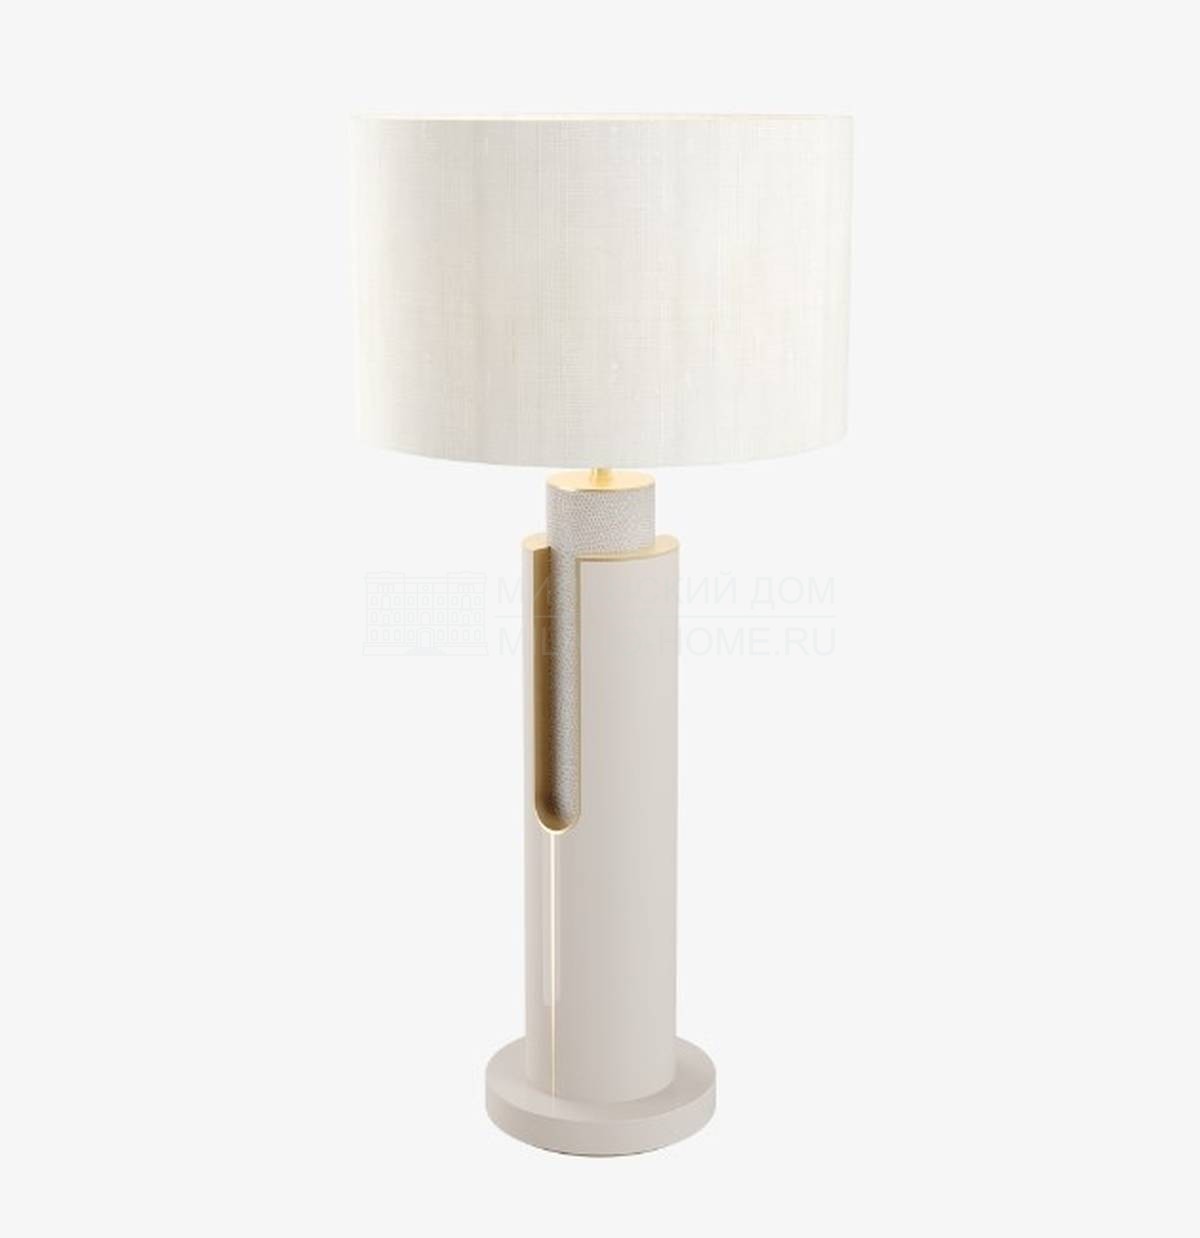 Настольная лампа Pasadena table lamp из Португалии фабрики FRATO